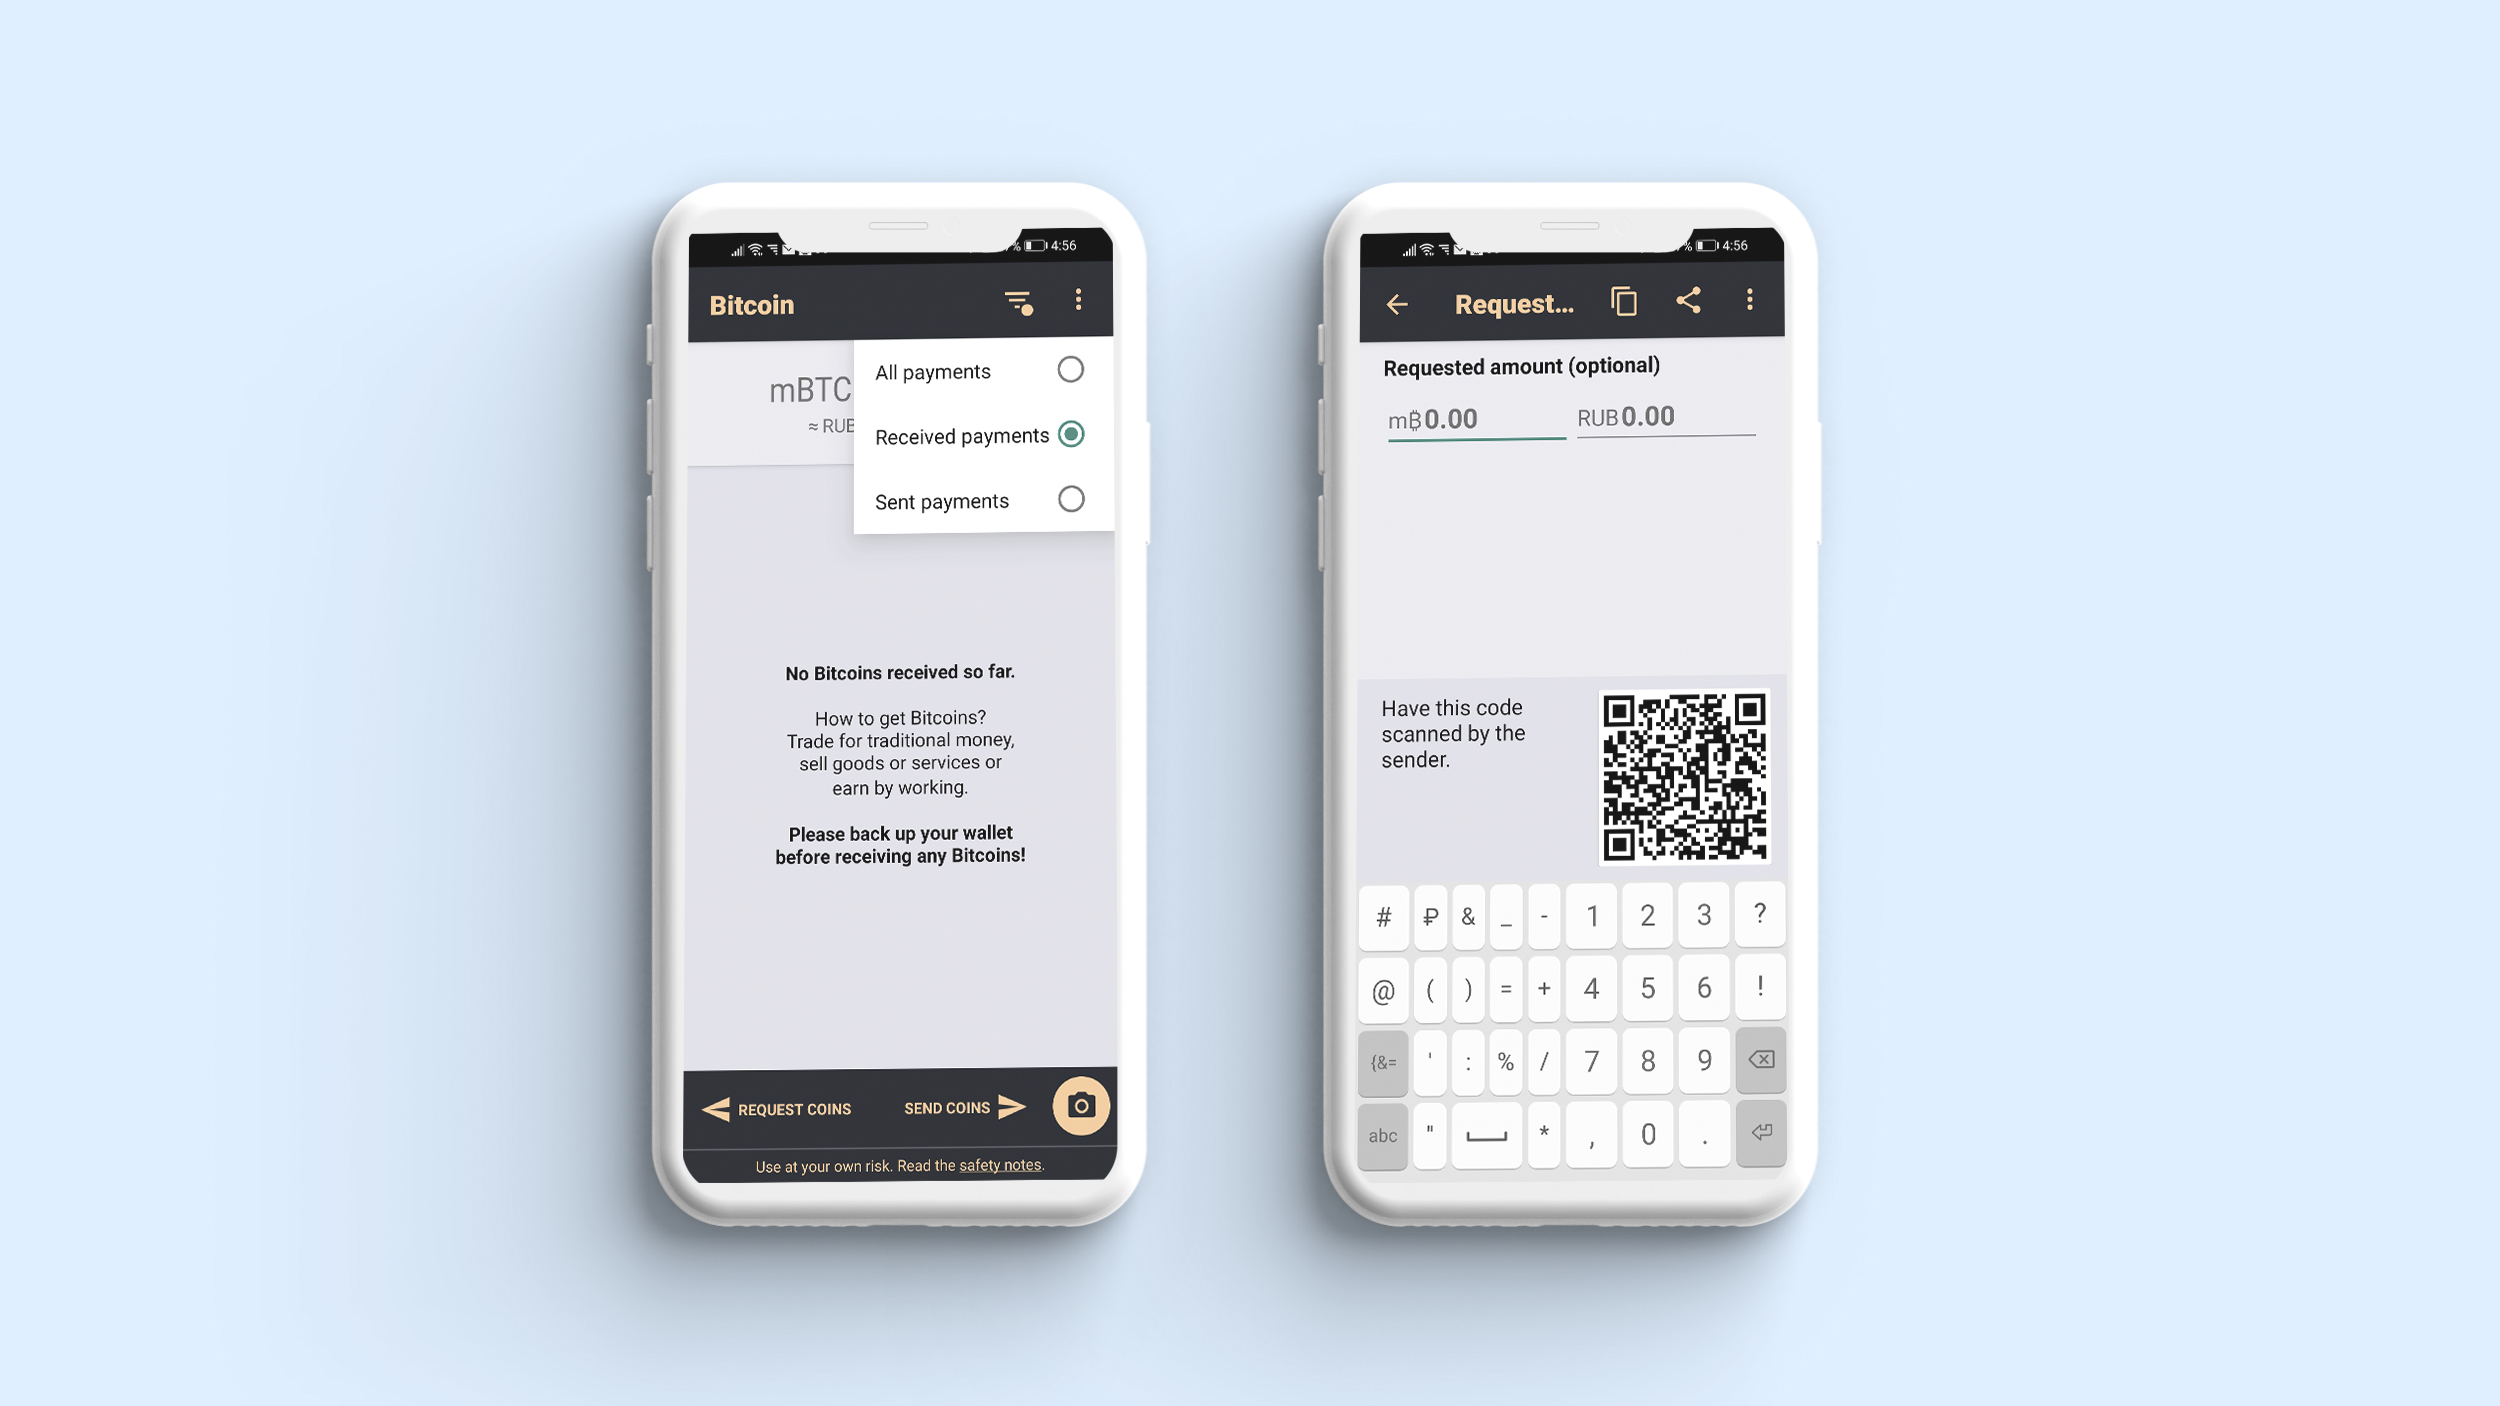 Transaction screen in crypto wallet app